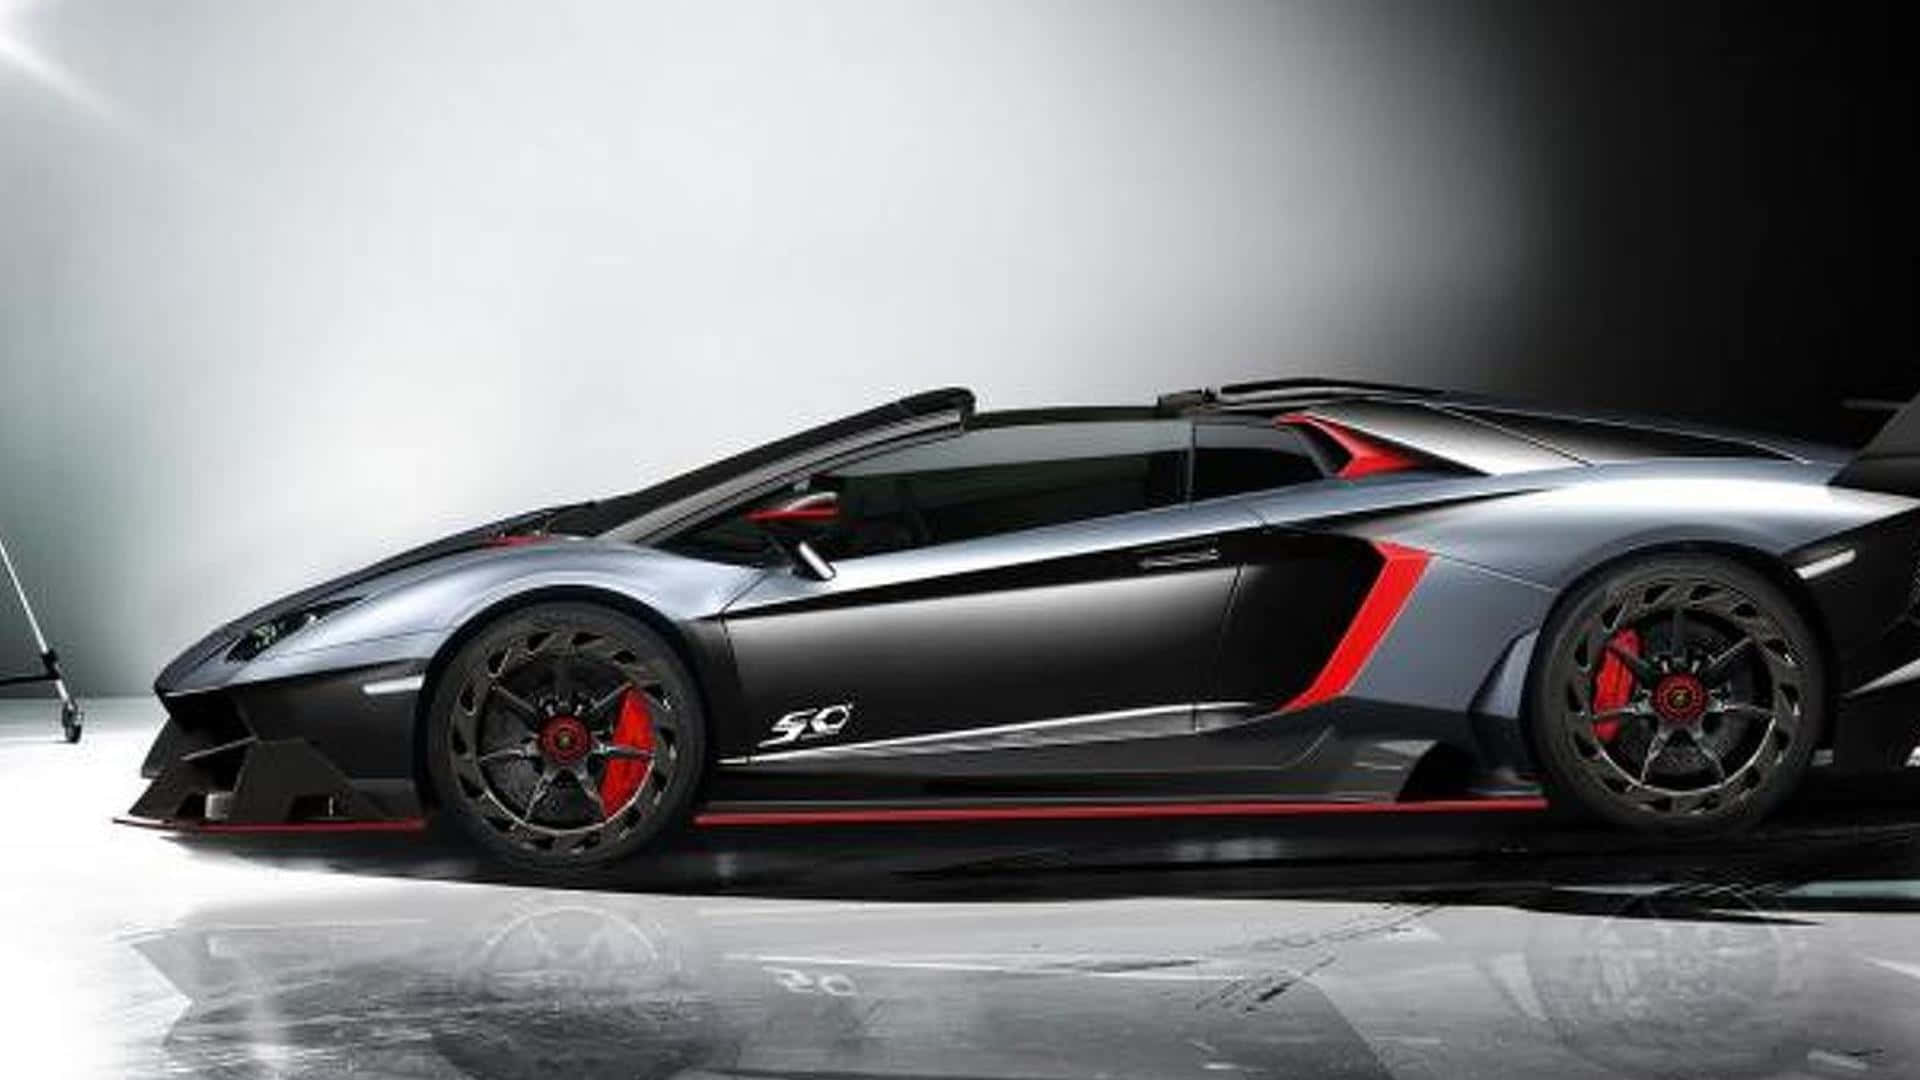 A stunning Lamborghini Veneno showcasing its sleek design and impeccable engineering against a vivid backdrop. Wallpaper